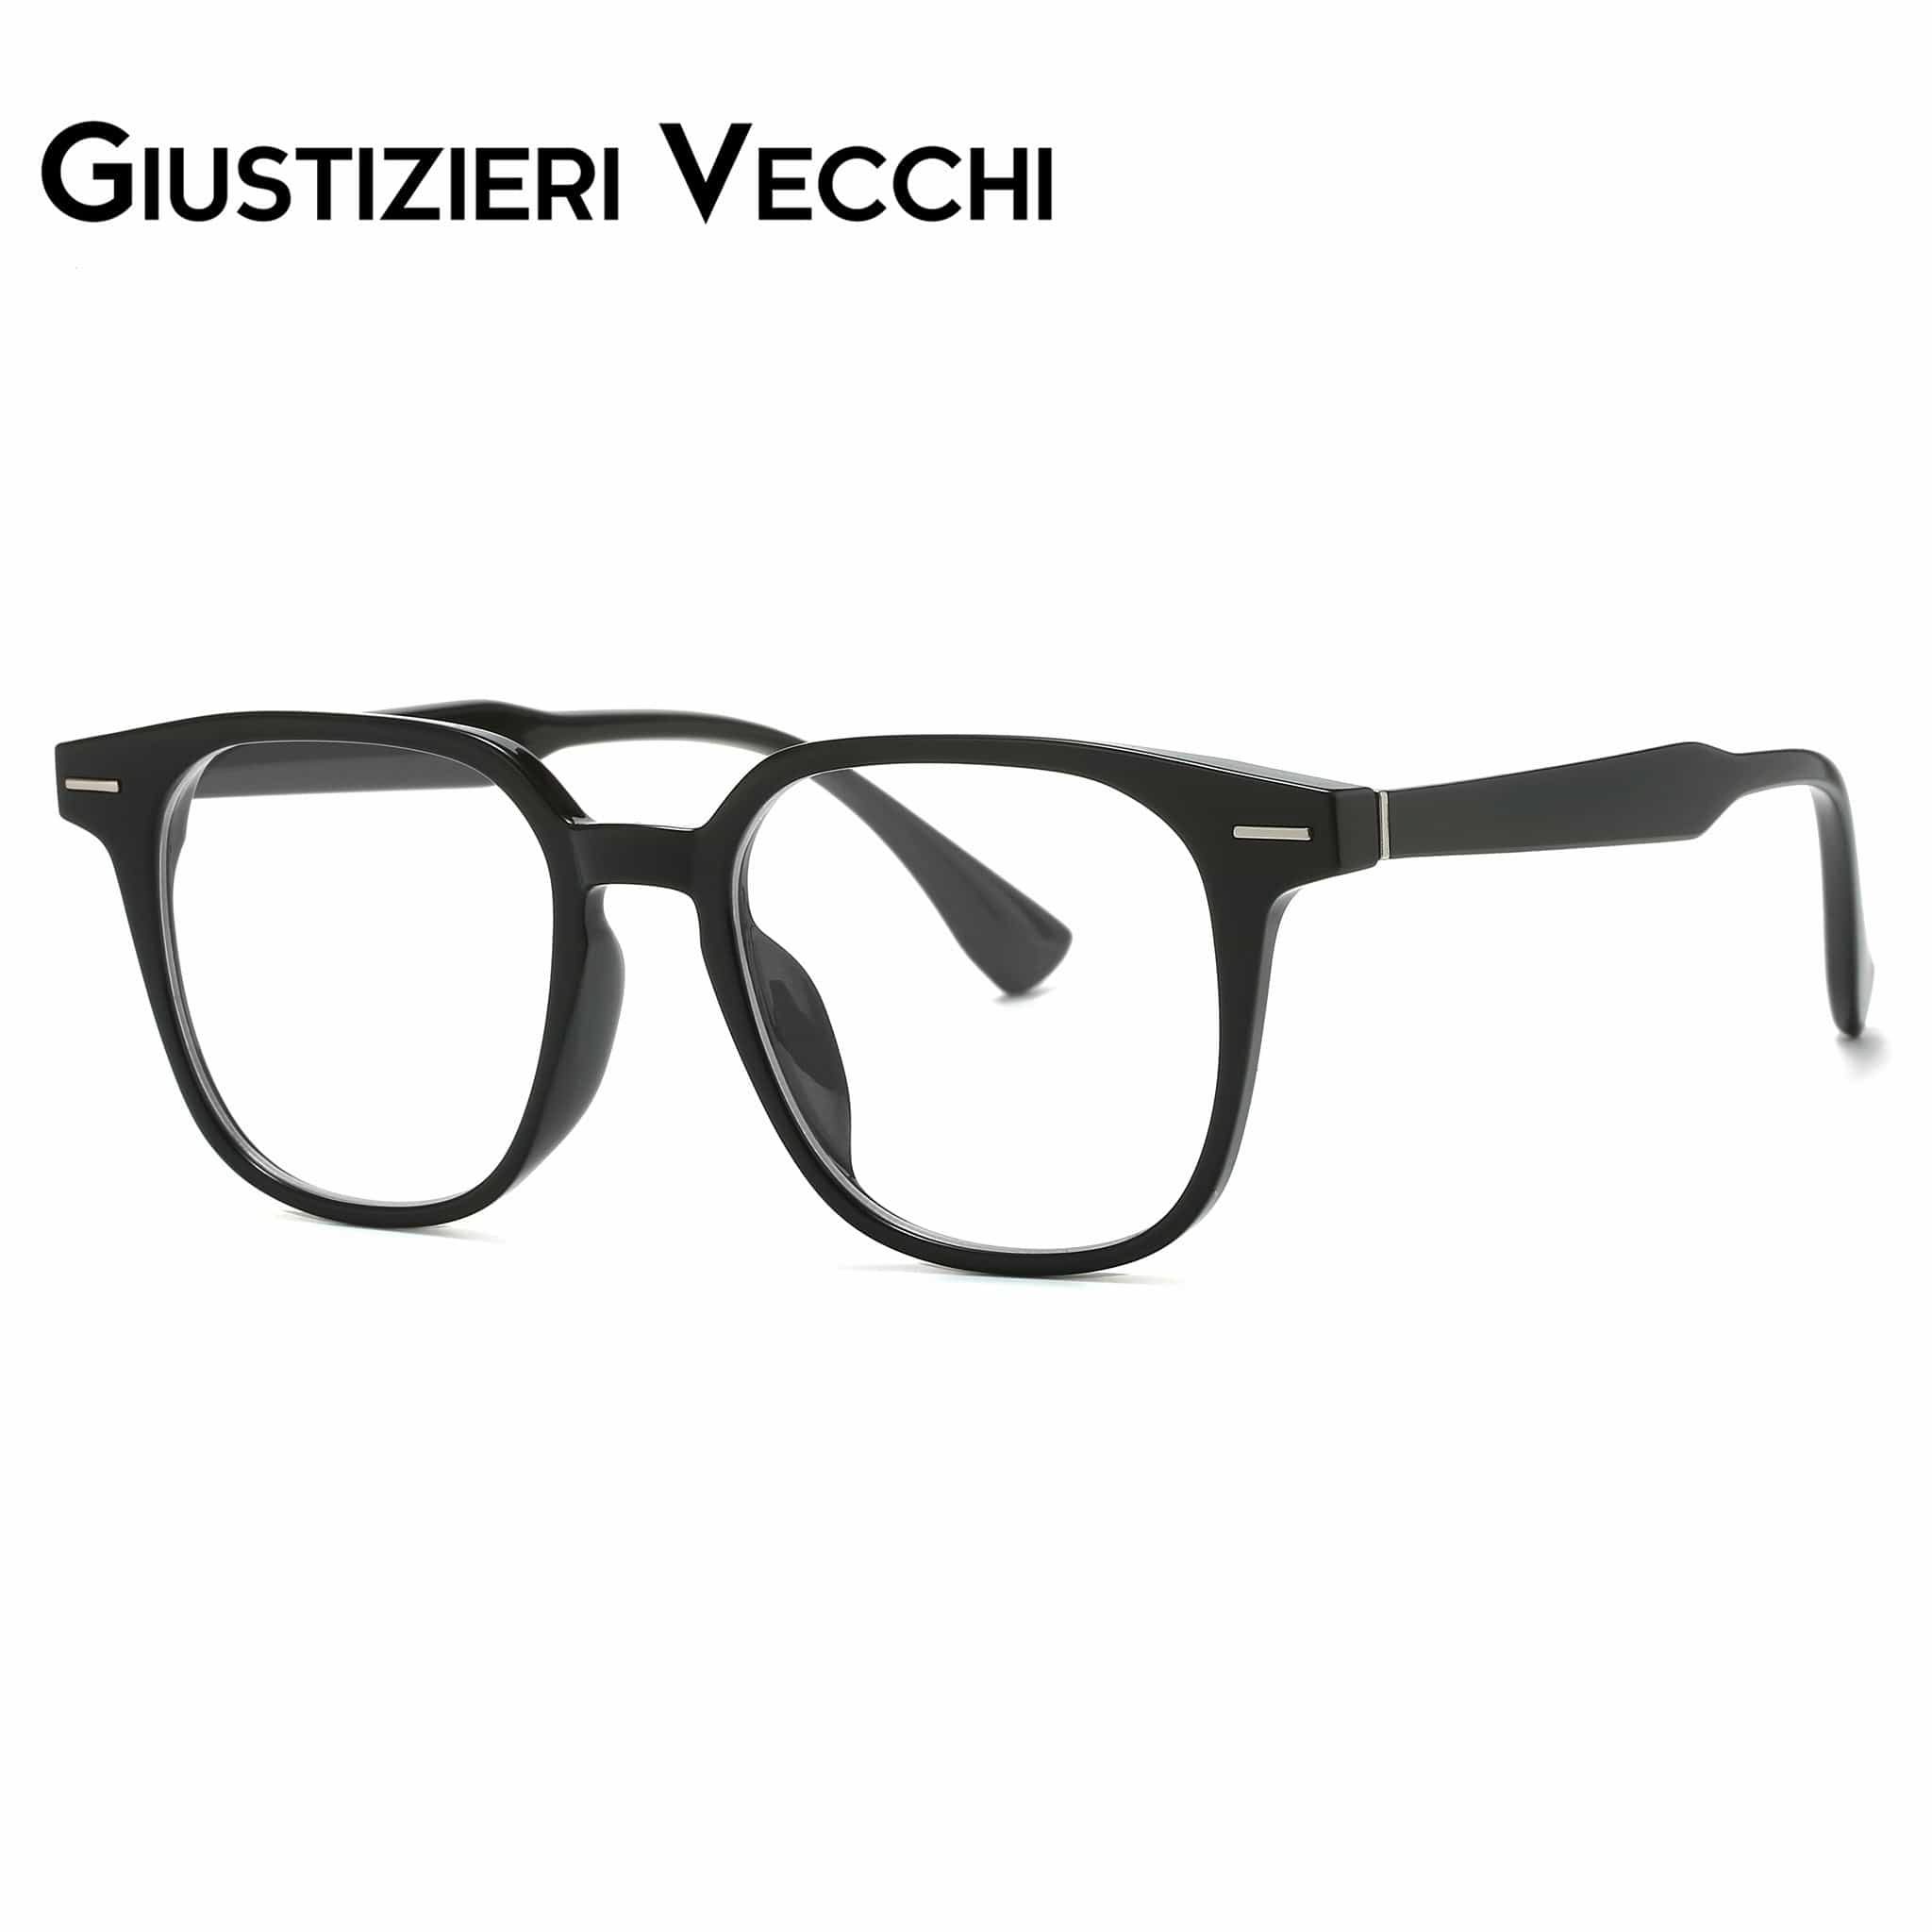 GIUSTIZIERI VECCHI Eyeglasses IceWave Uno